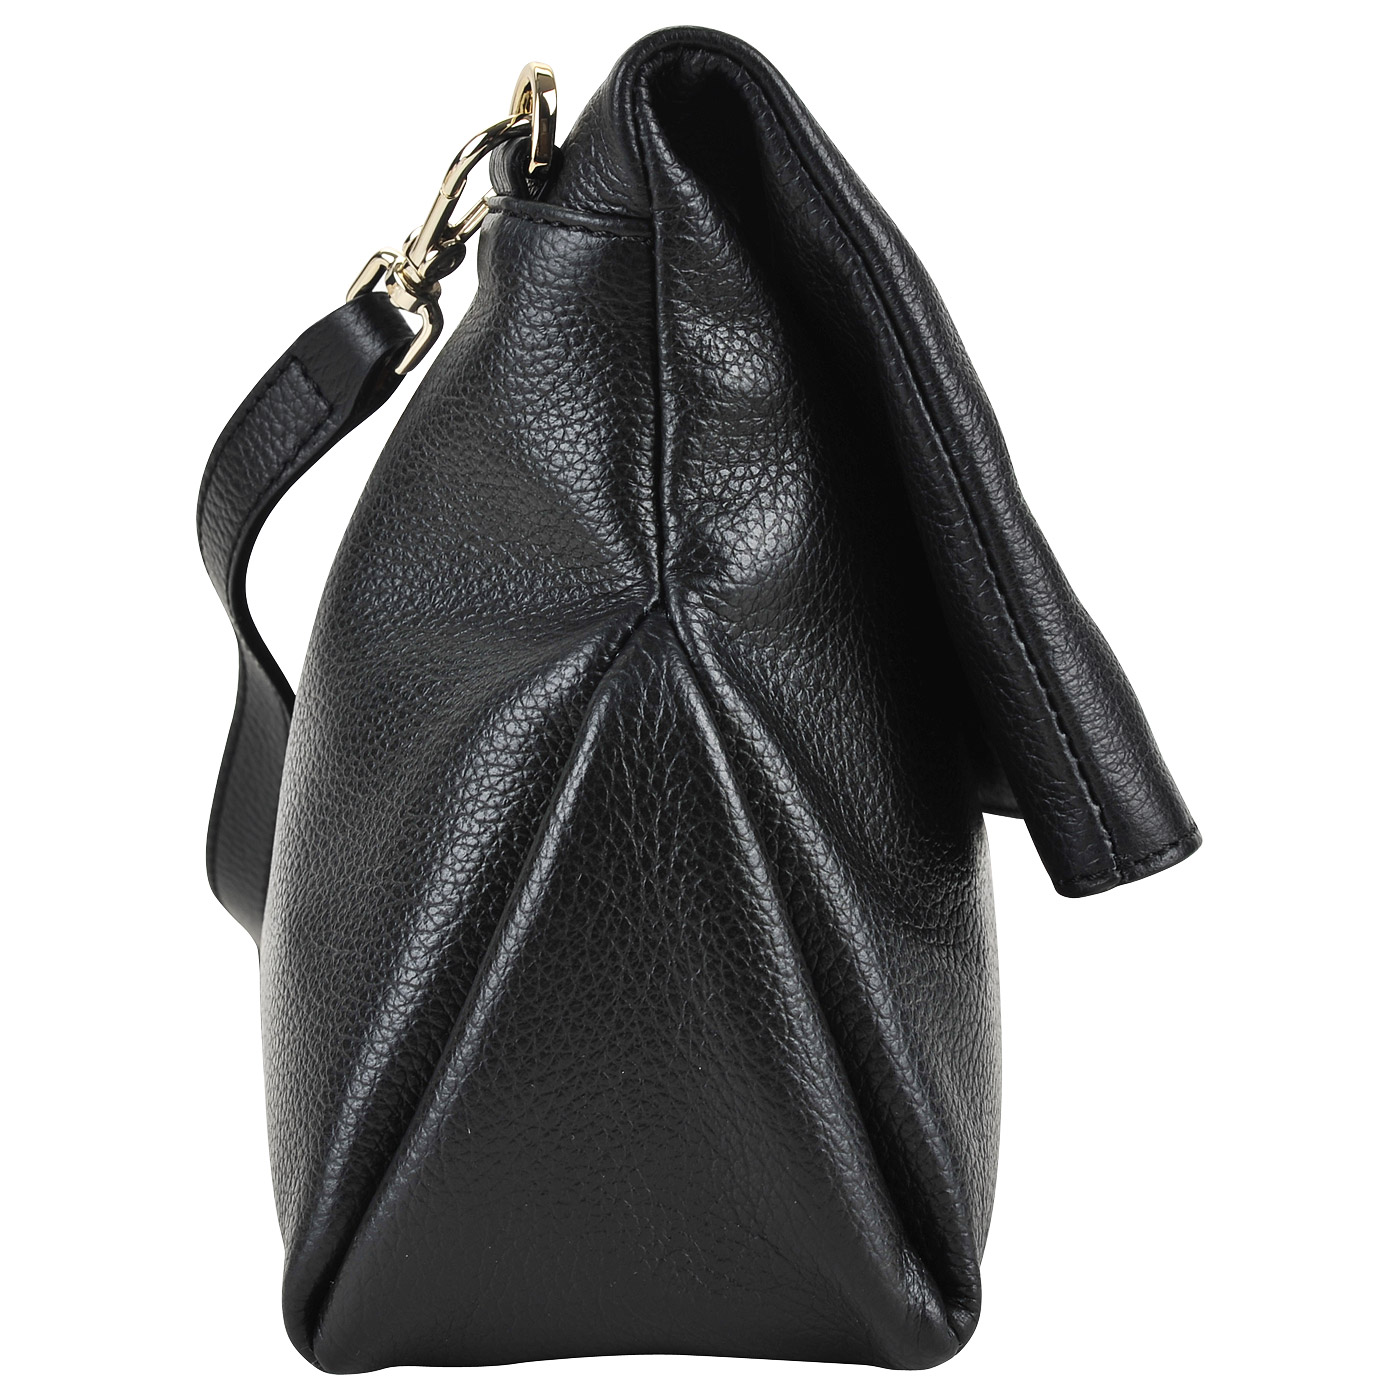 Женская кожаная сумка со съемным плечевым ремешком Coccinelle Iphigenie